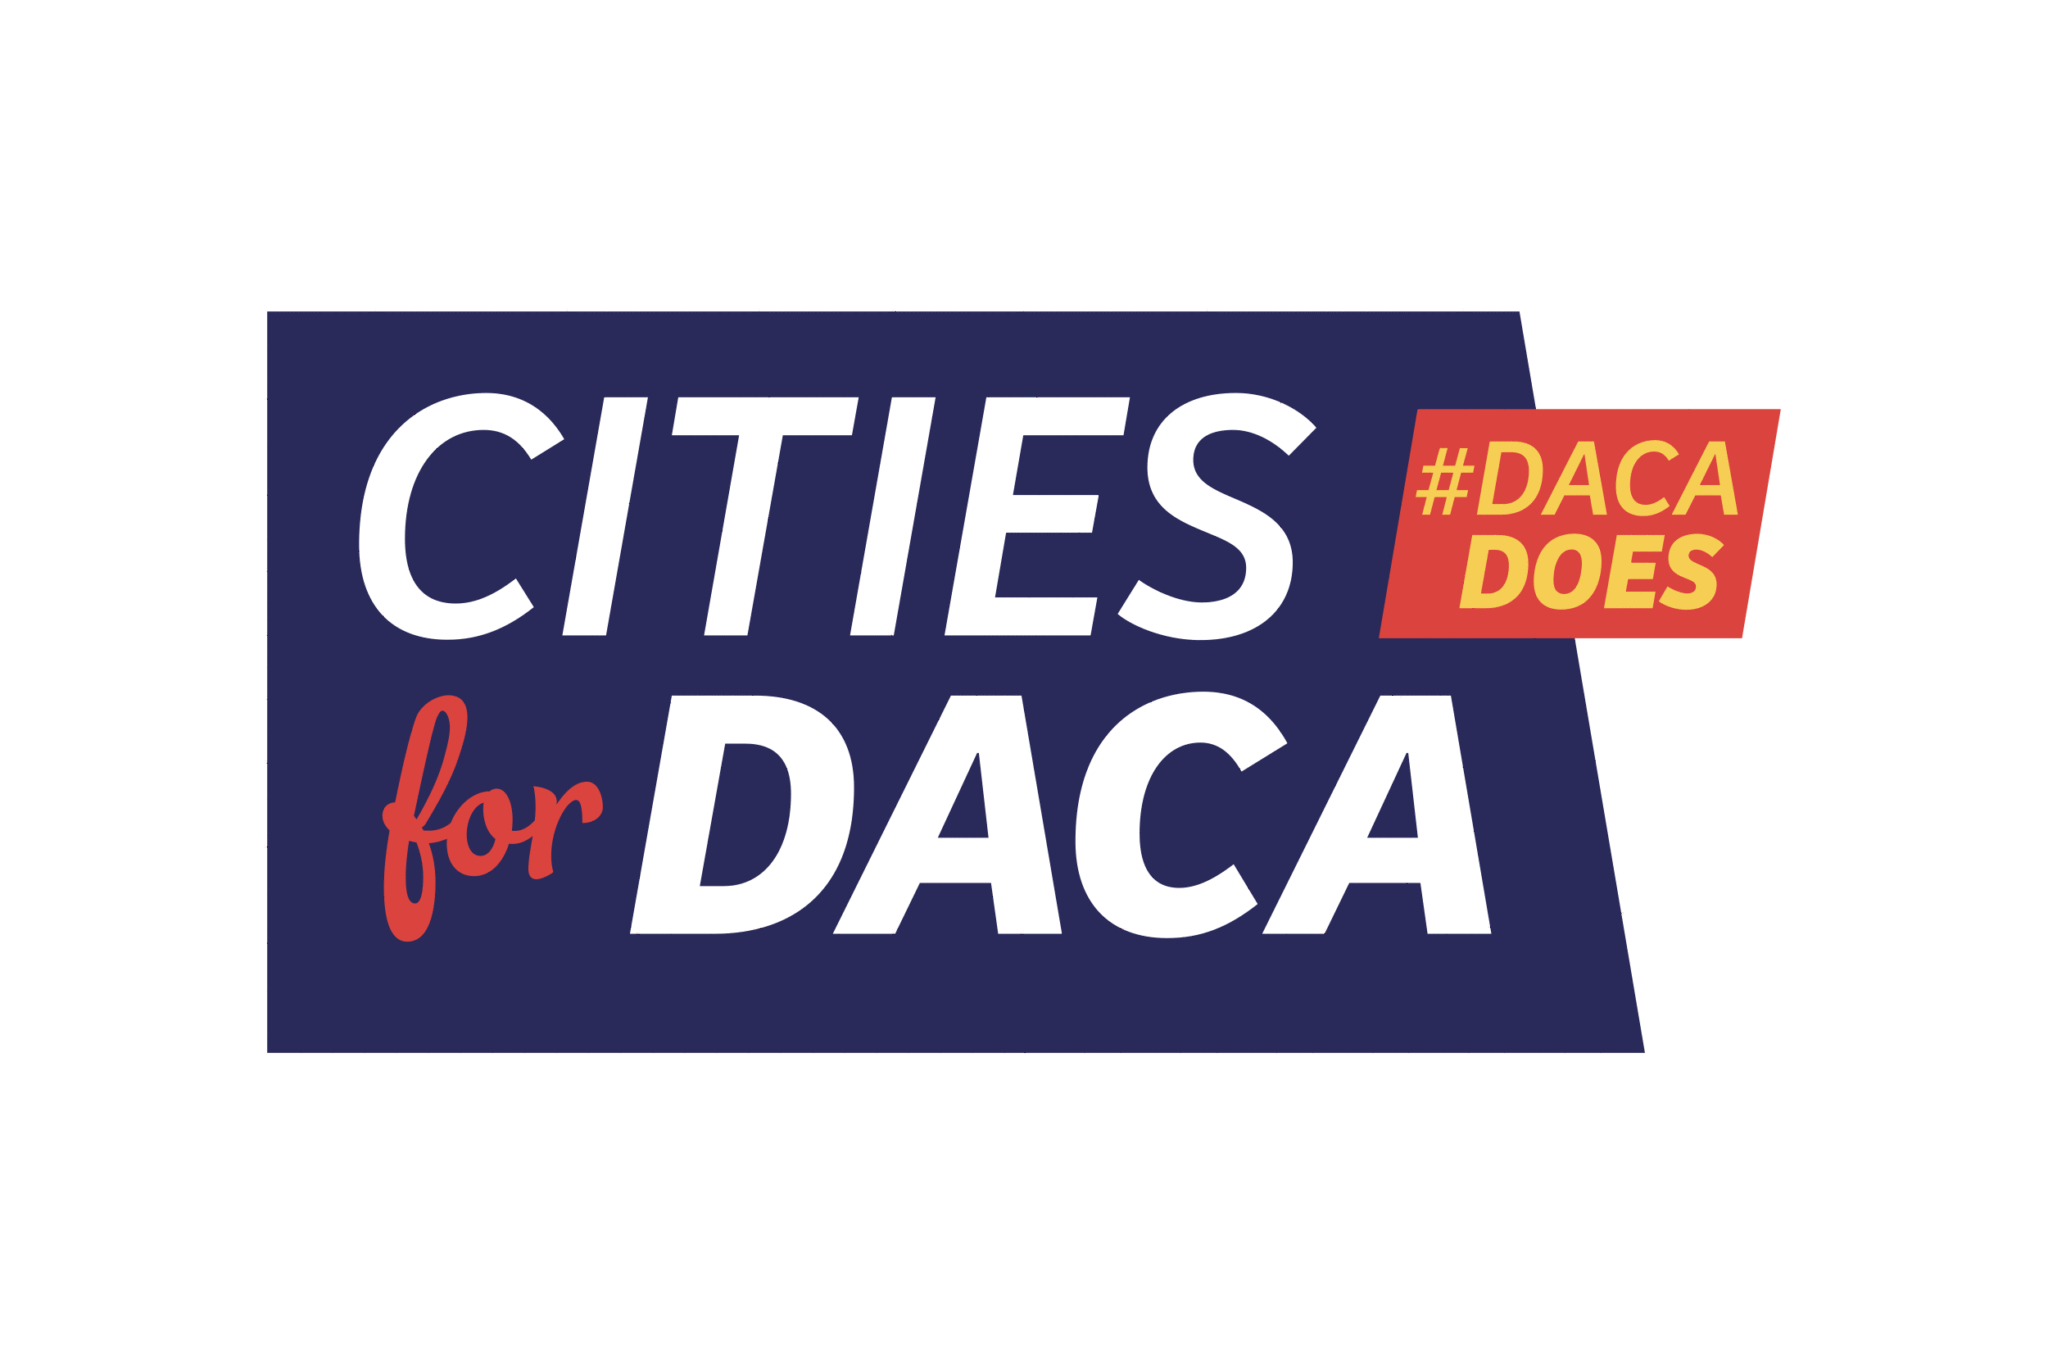 Cities for DACA